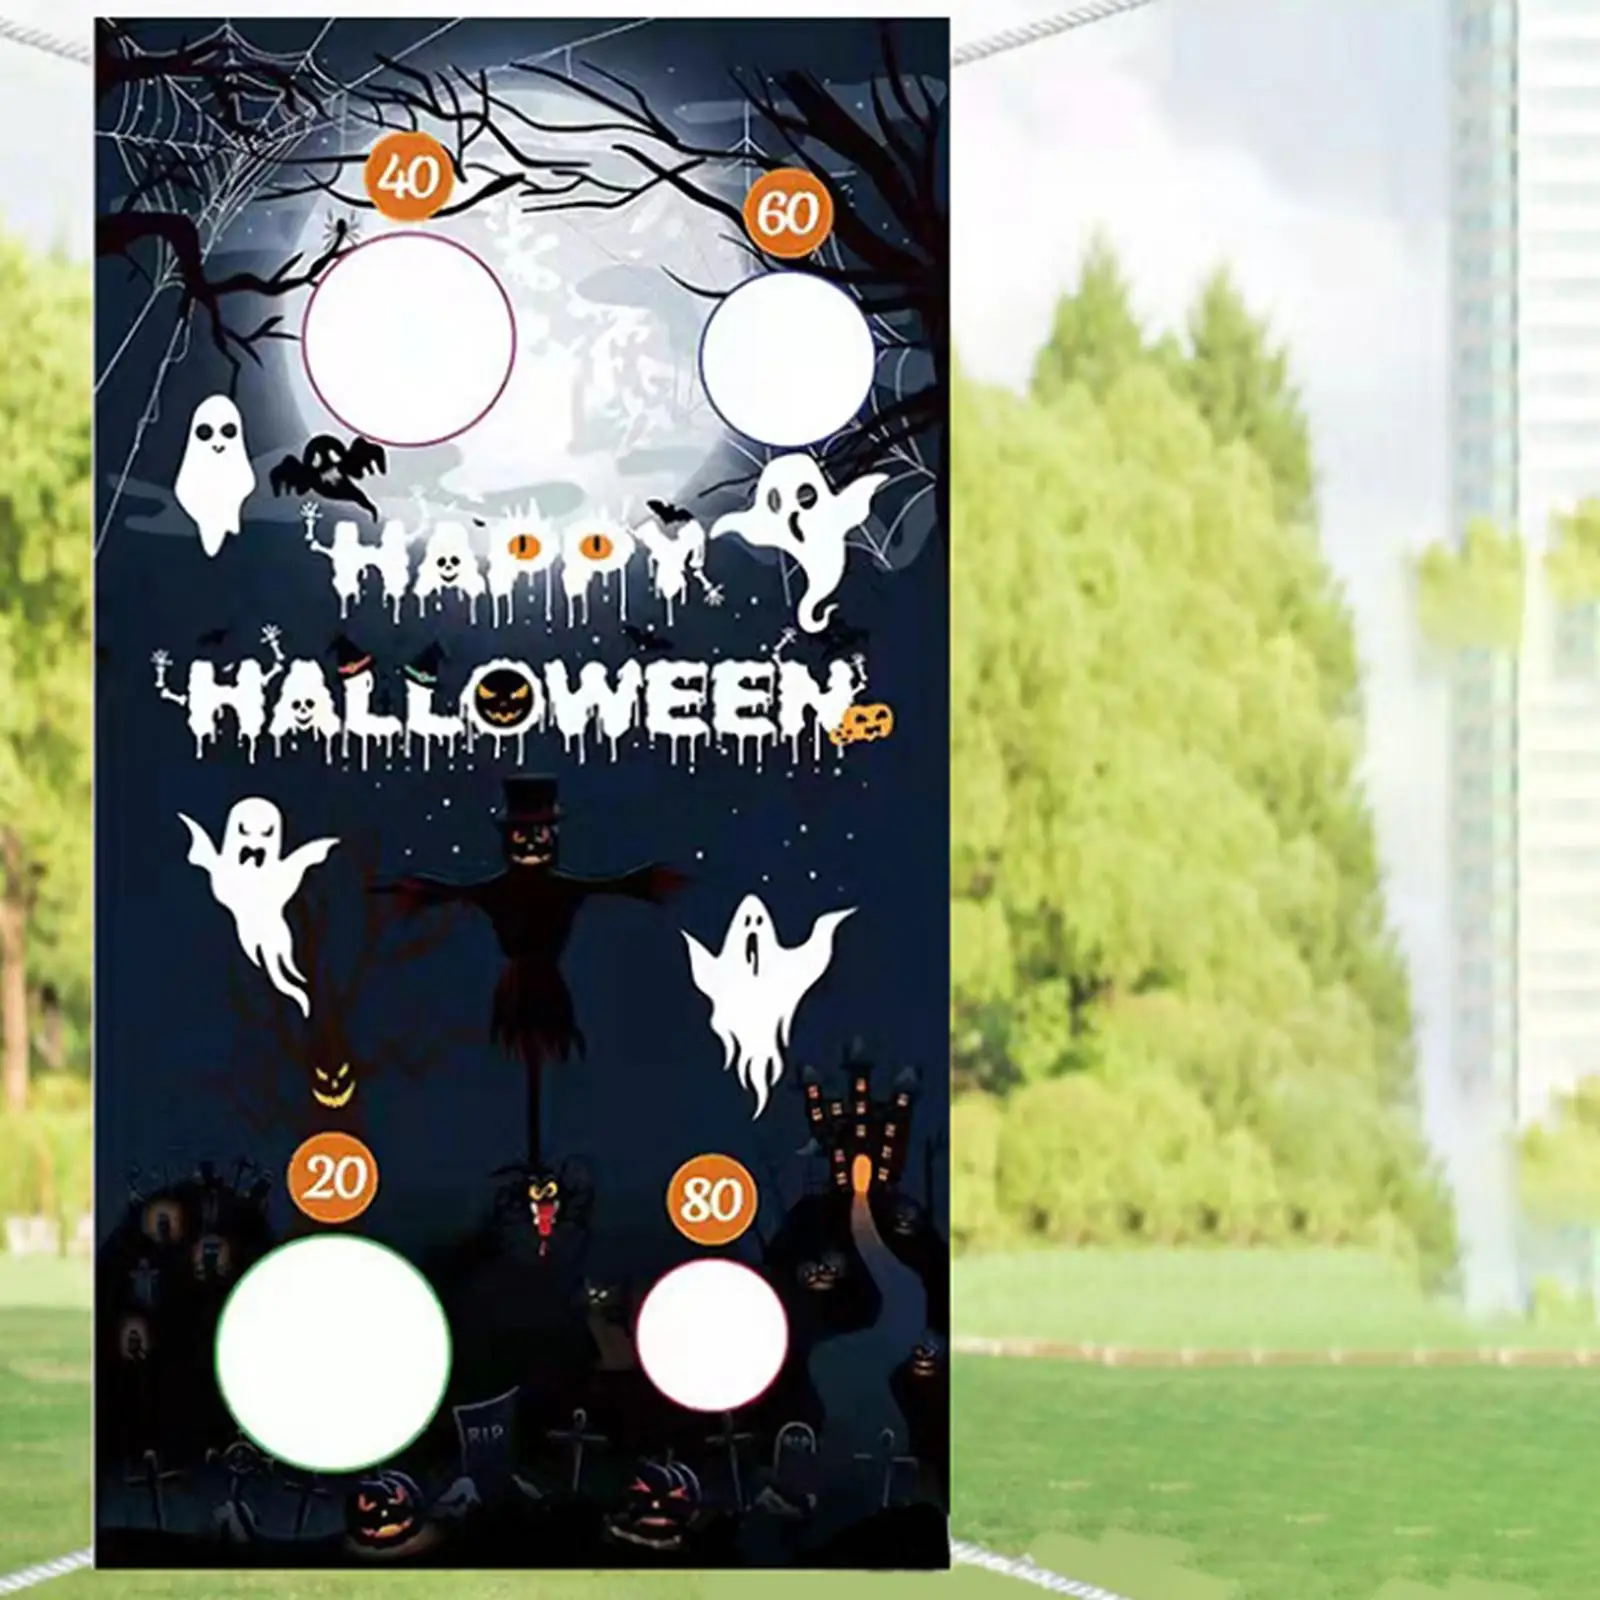 Reusable Halloween Toss Party Supplies Hanging Toss Game Banner for Garden Outdoor Courtyard Throwing Game Activities